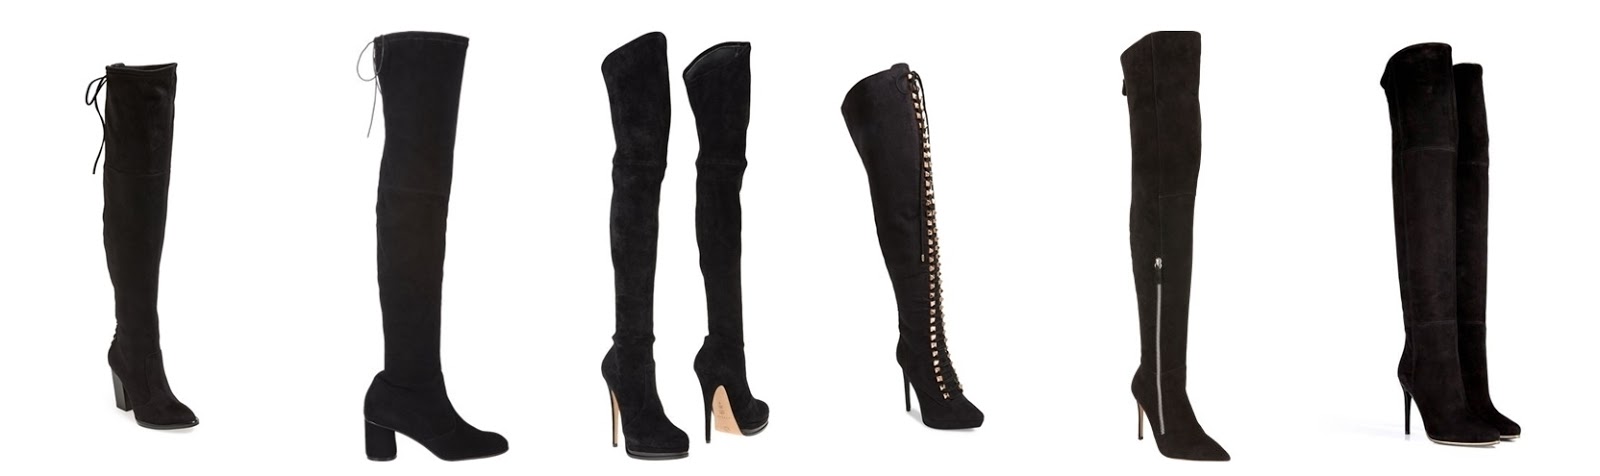 Over the knee boots_Katharine-fashion is beautiful_Čižmy nad kolená_Katarína Jakubčová_Fashion blogger